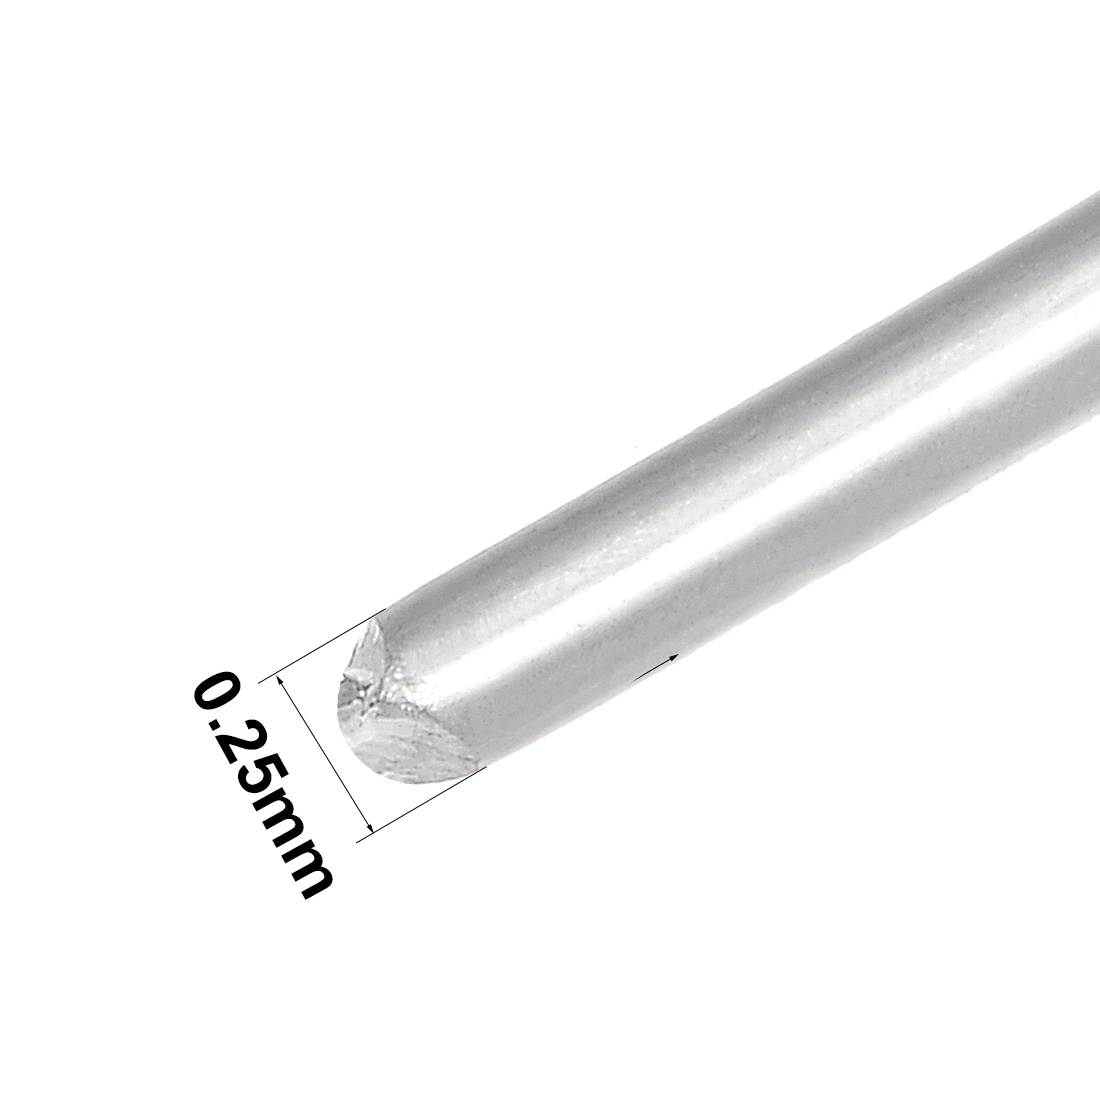 1 Roll 10m Nichrome Wire 0.5mm Diam Cr20ni80 Heating Wire